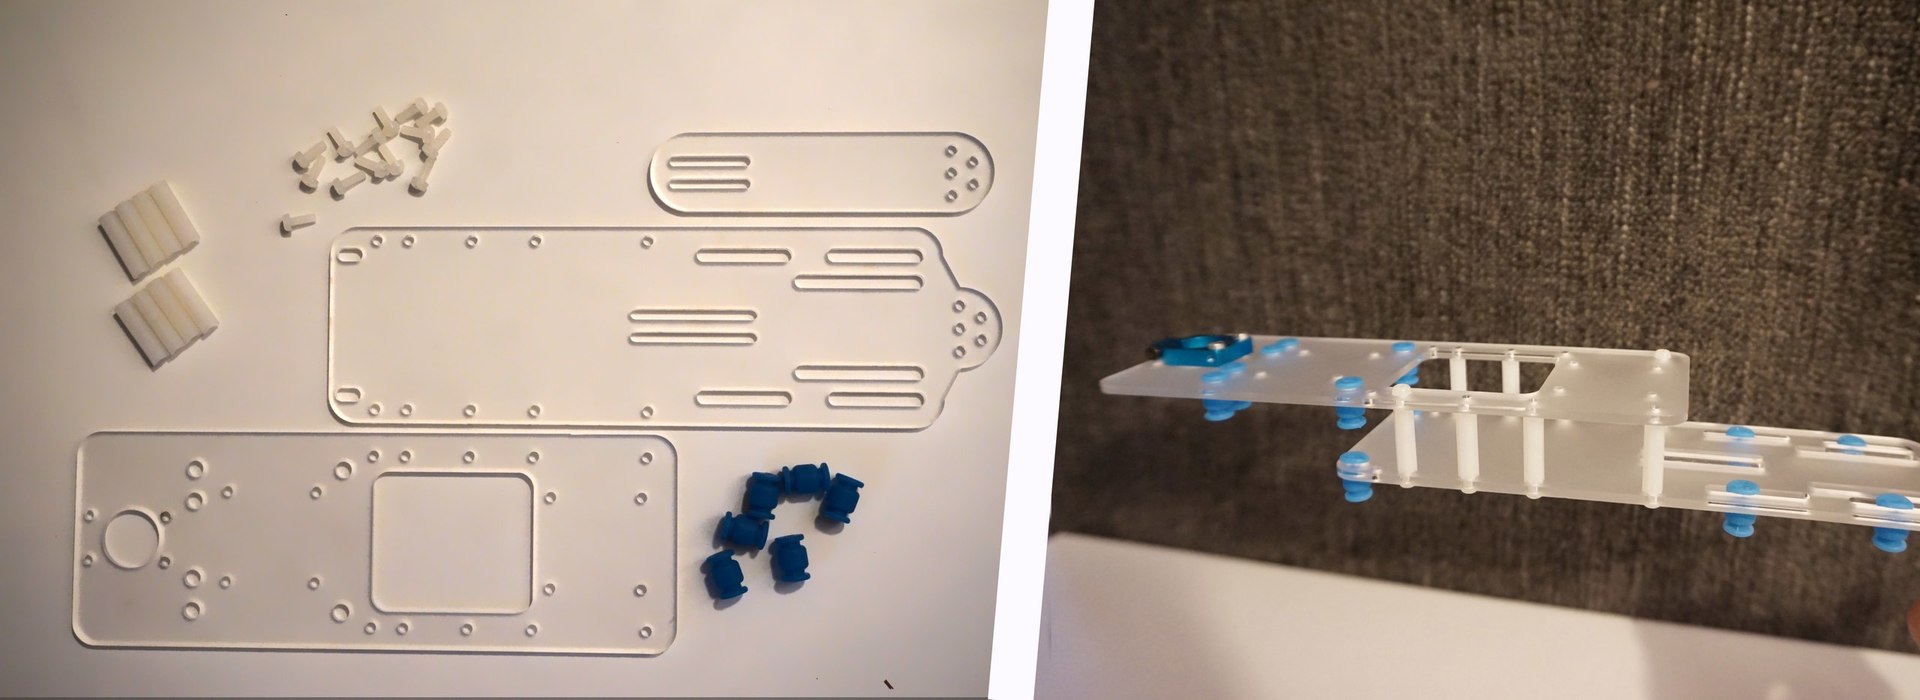 Коптер в рюкзаке (часть 2) — Лего для дронов - 6